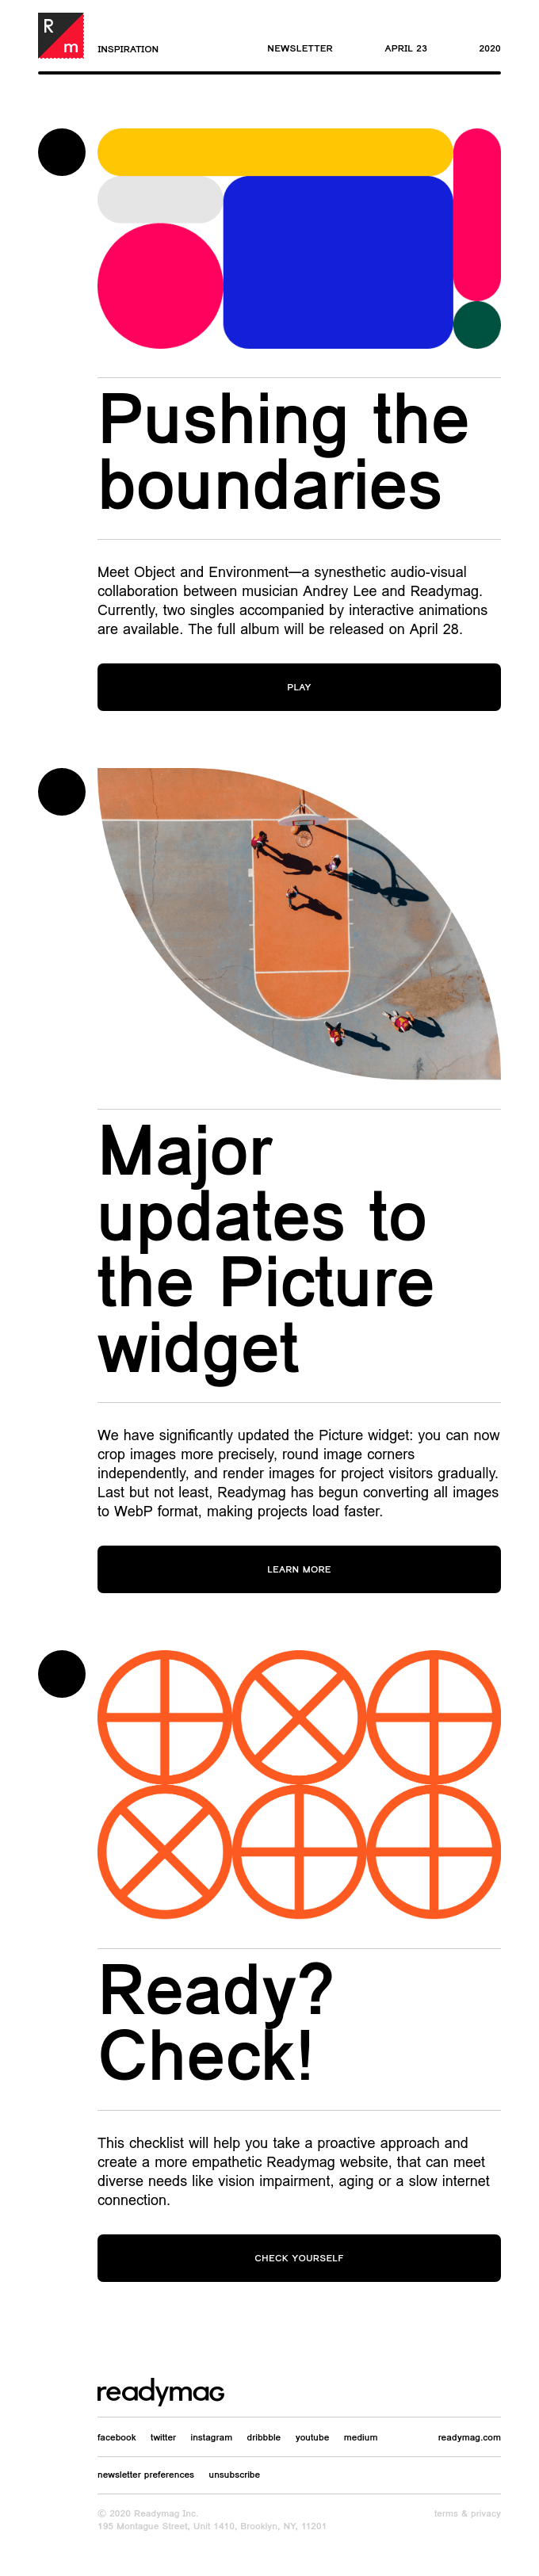 Readymag unveils big updates to Picture widget